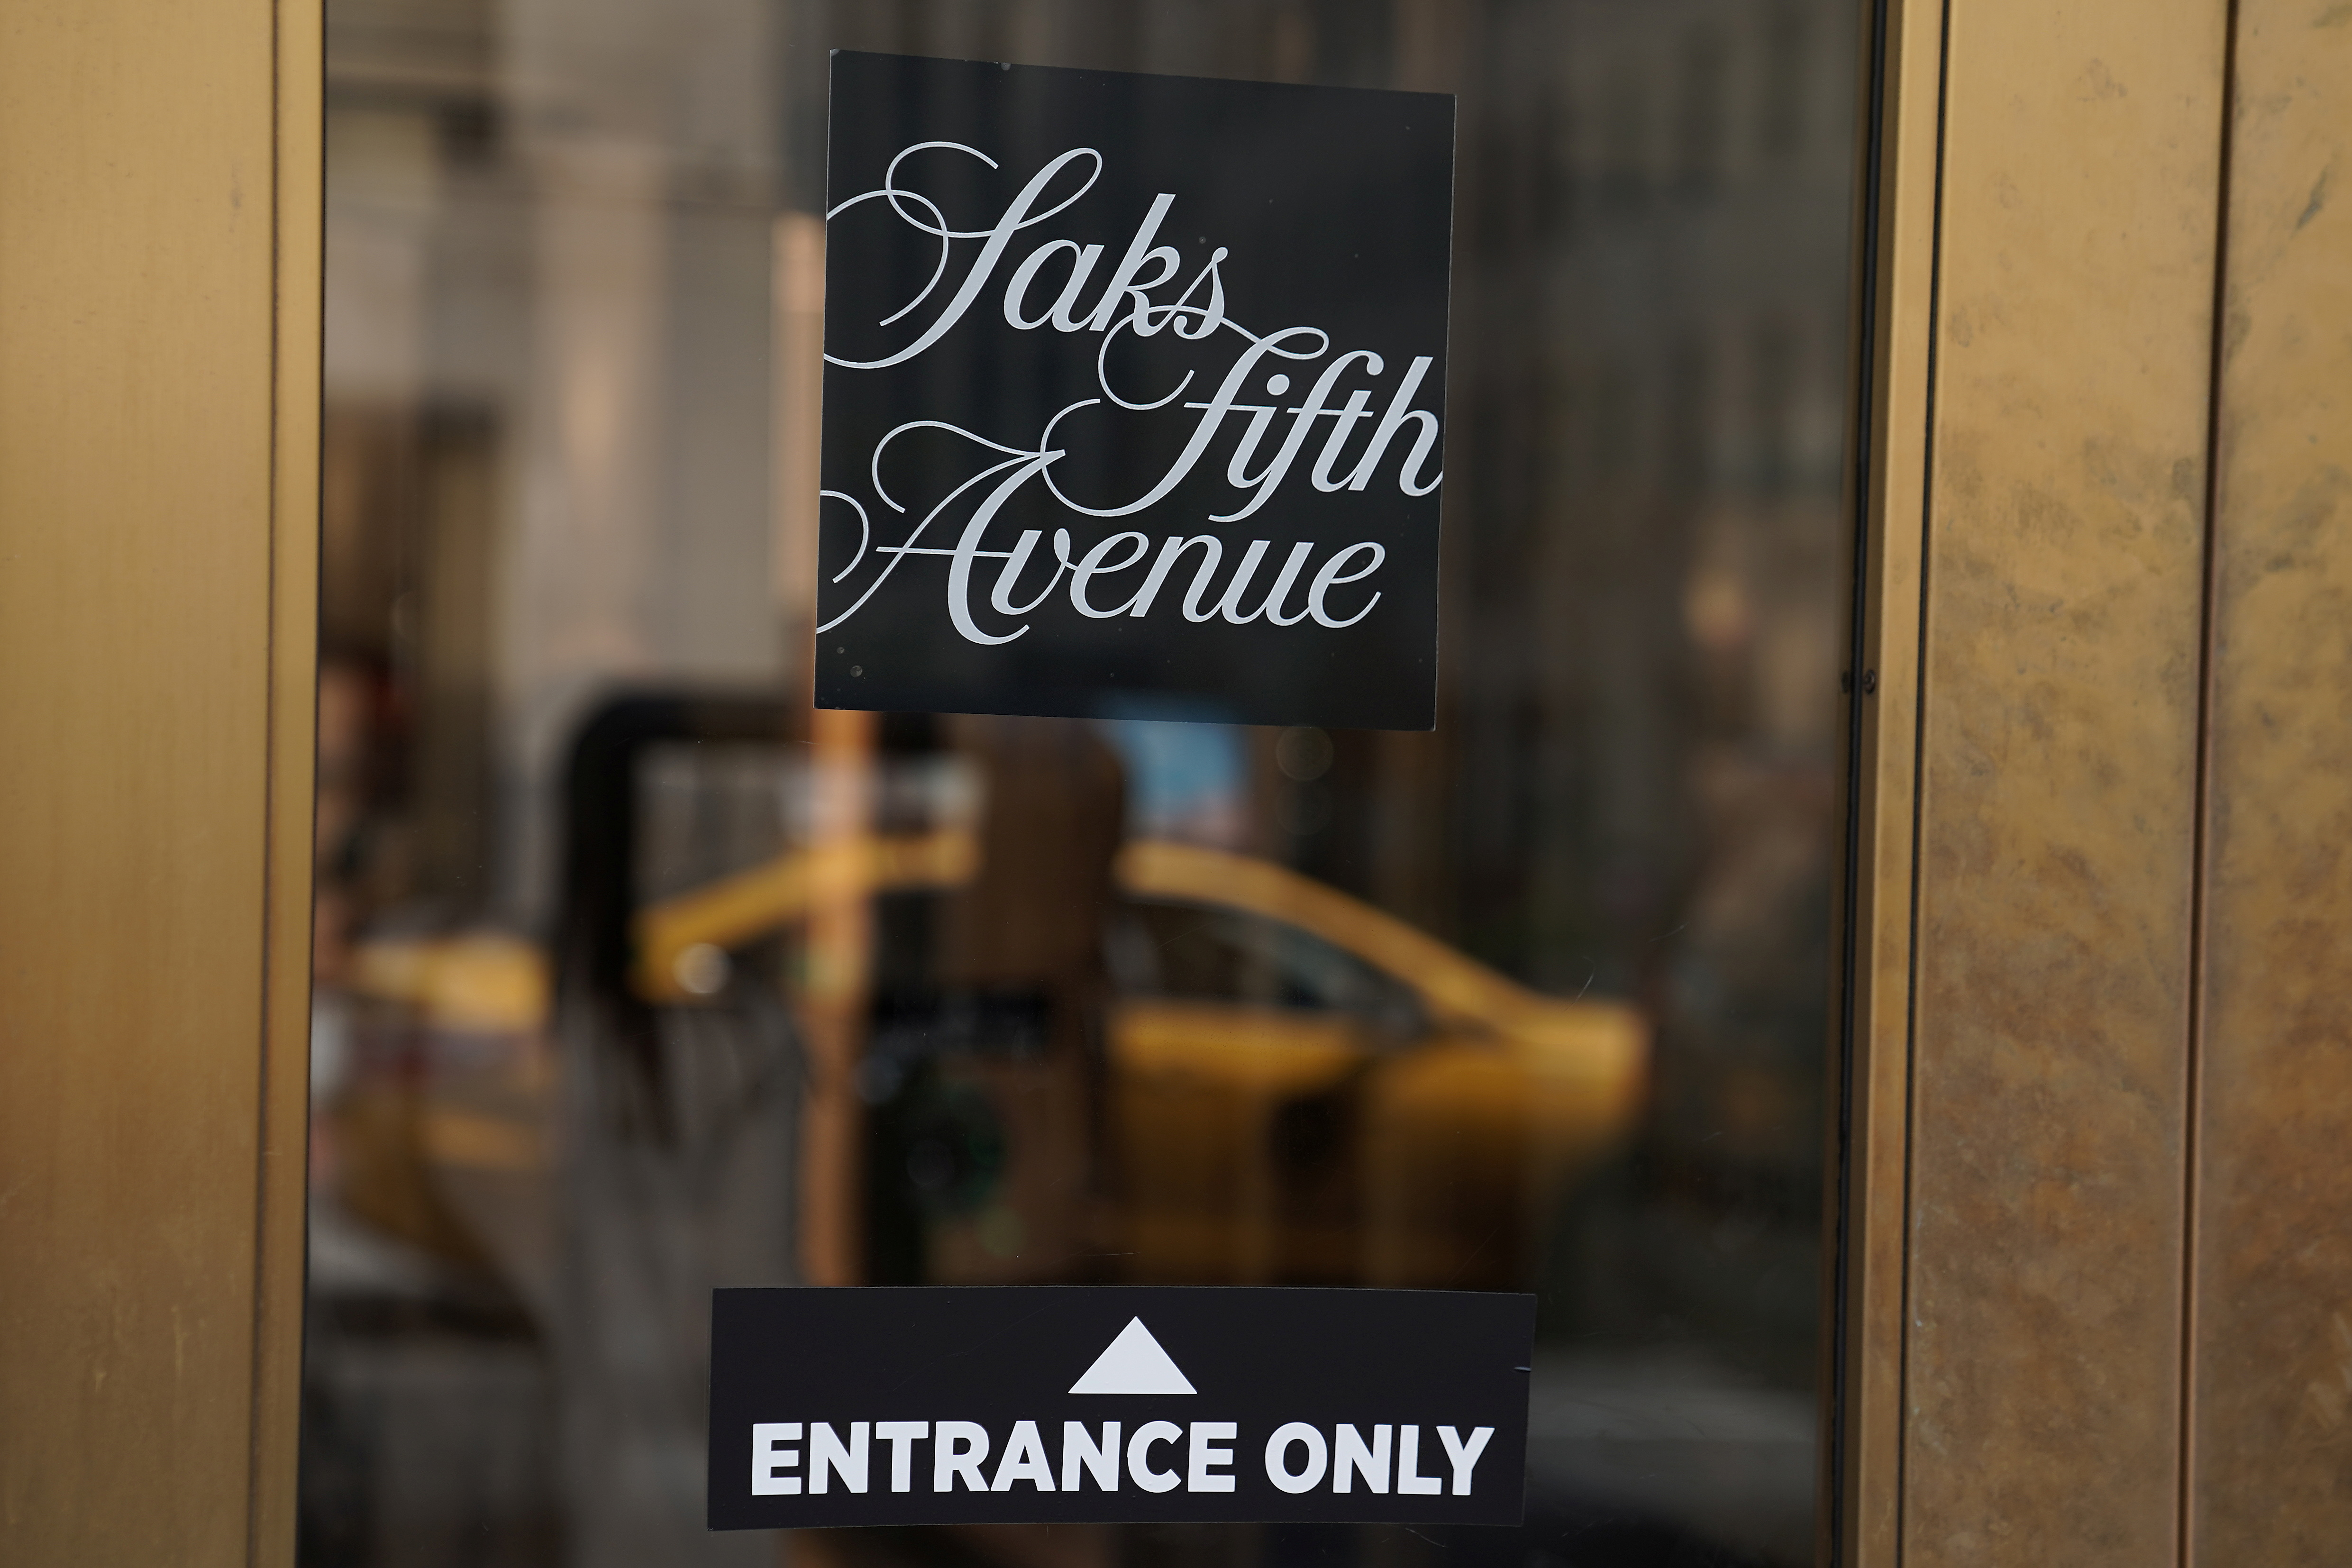 HBC  Saks Fifth Avenue